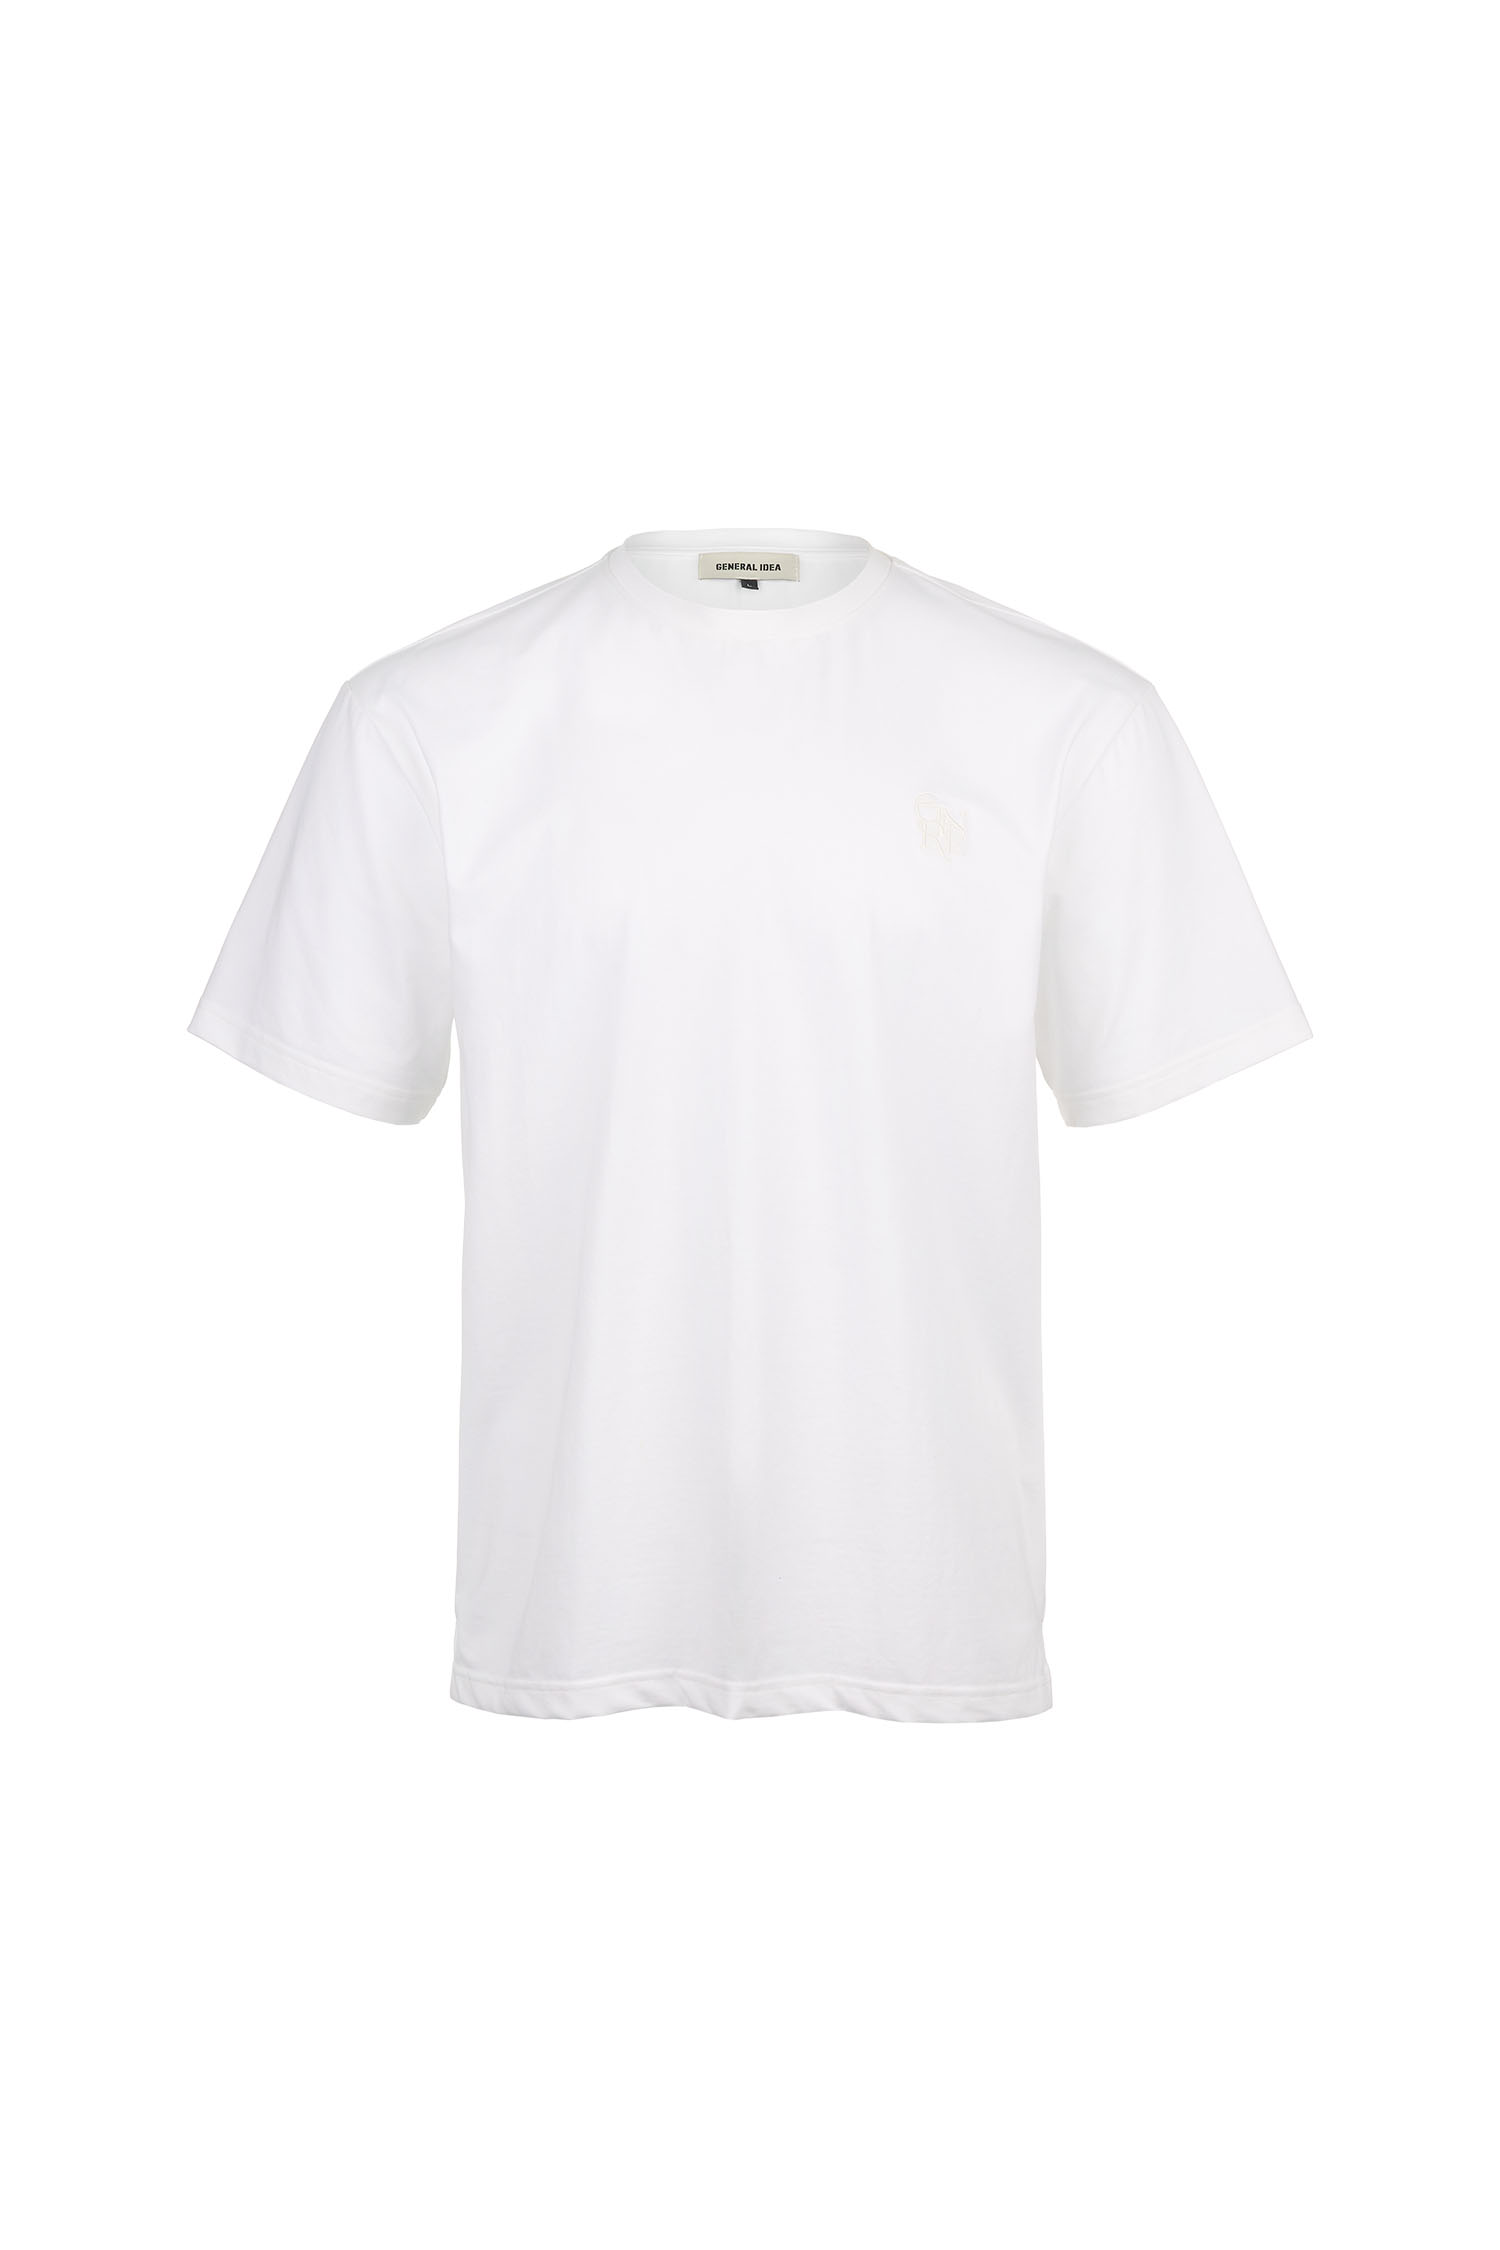 MANGNRL シルケット スパン Tシャツ [WHITE]